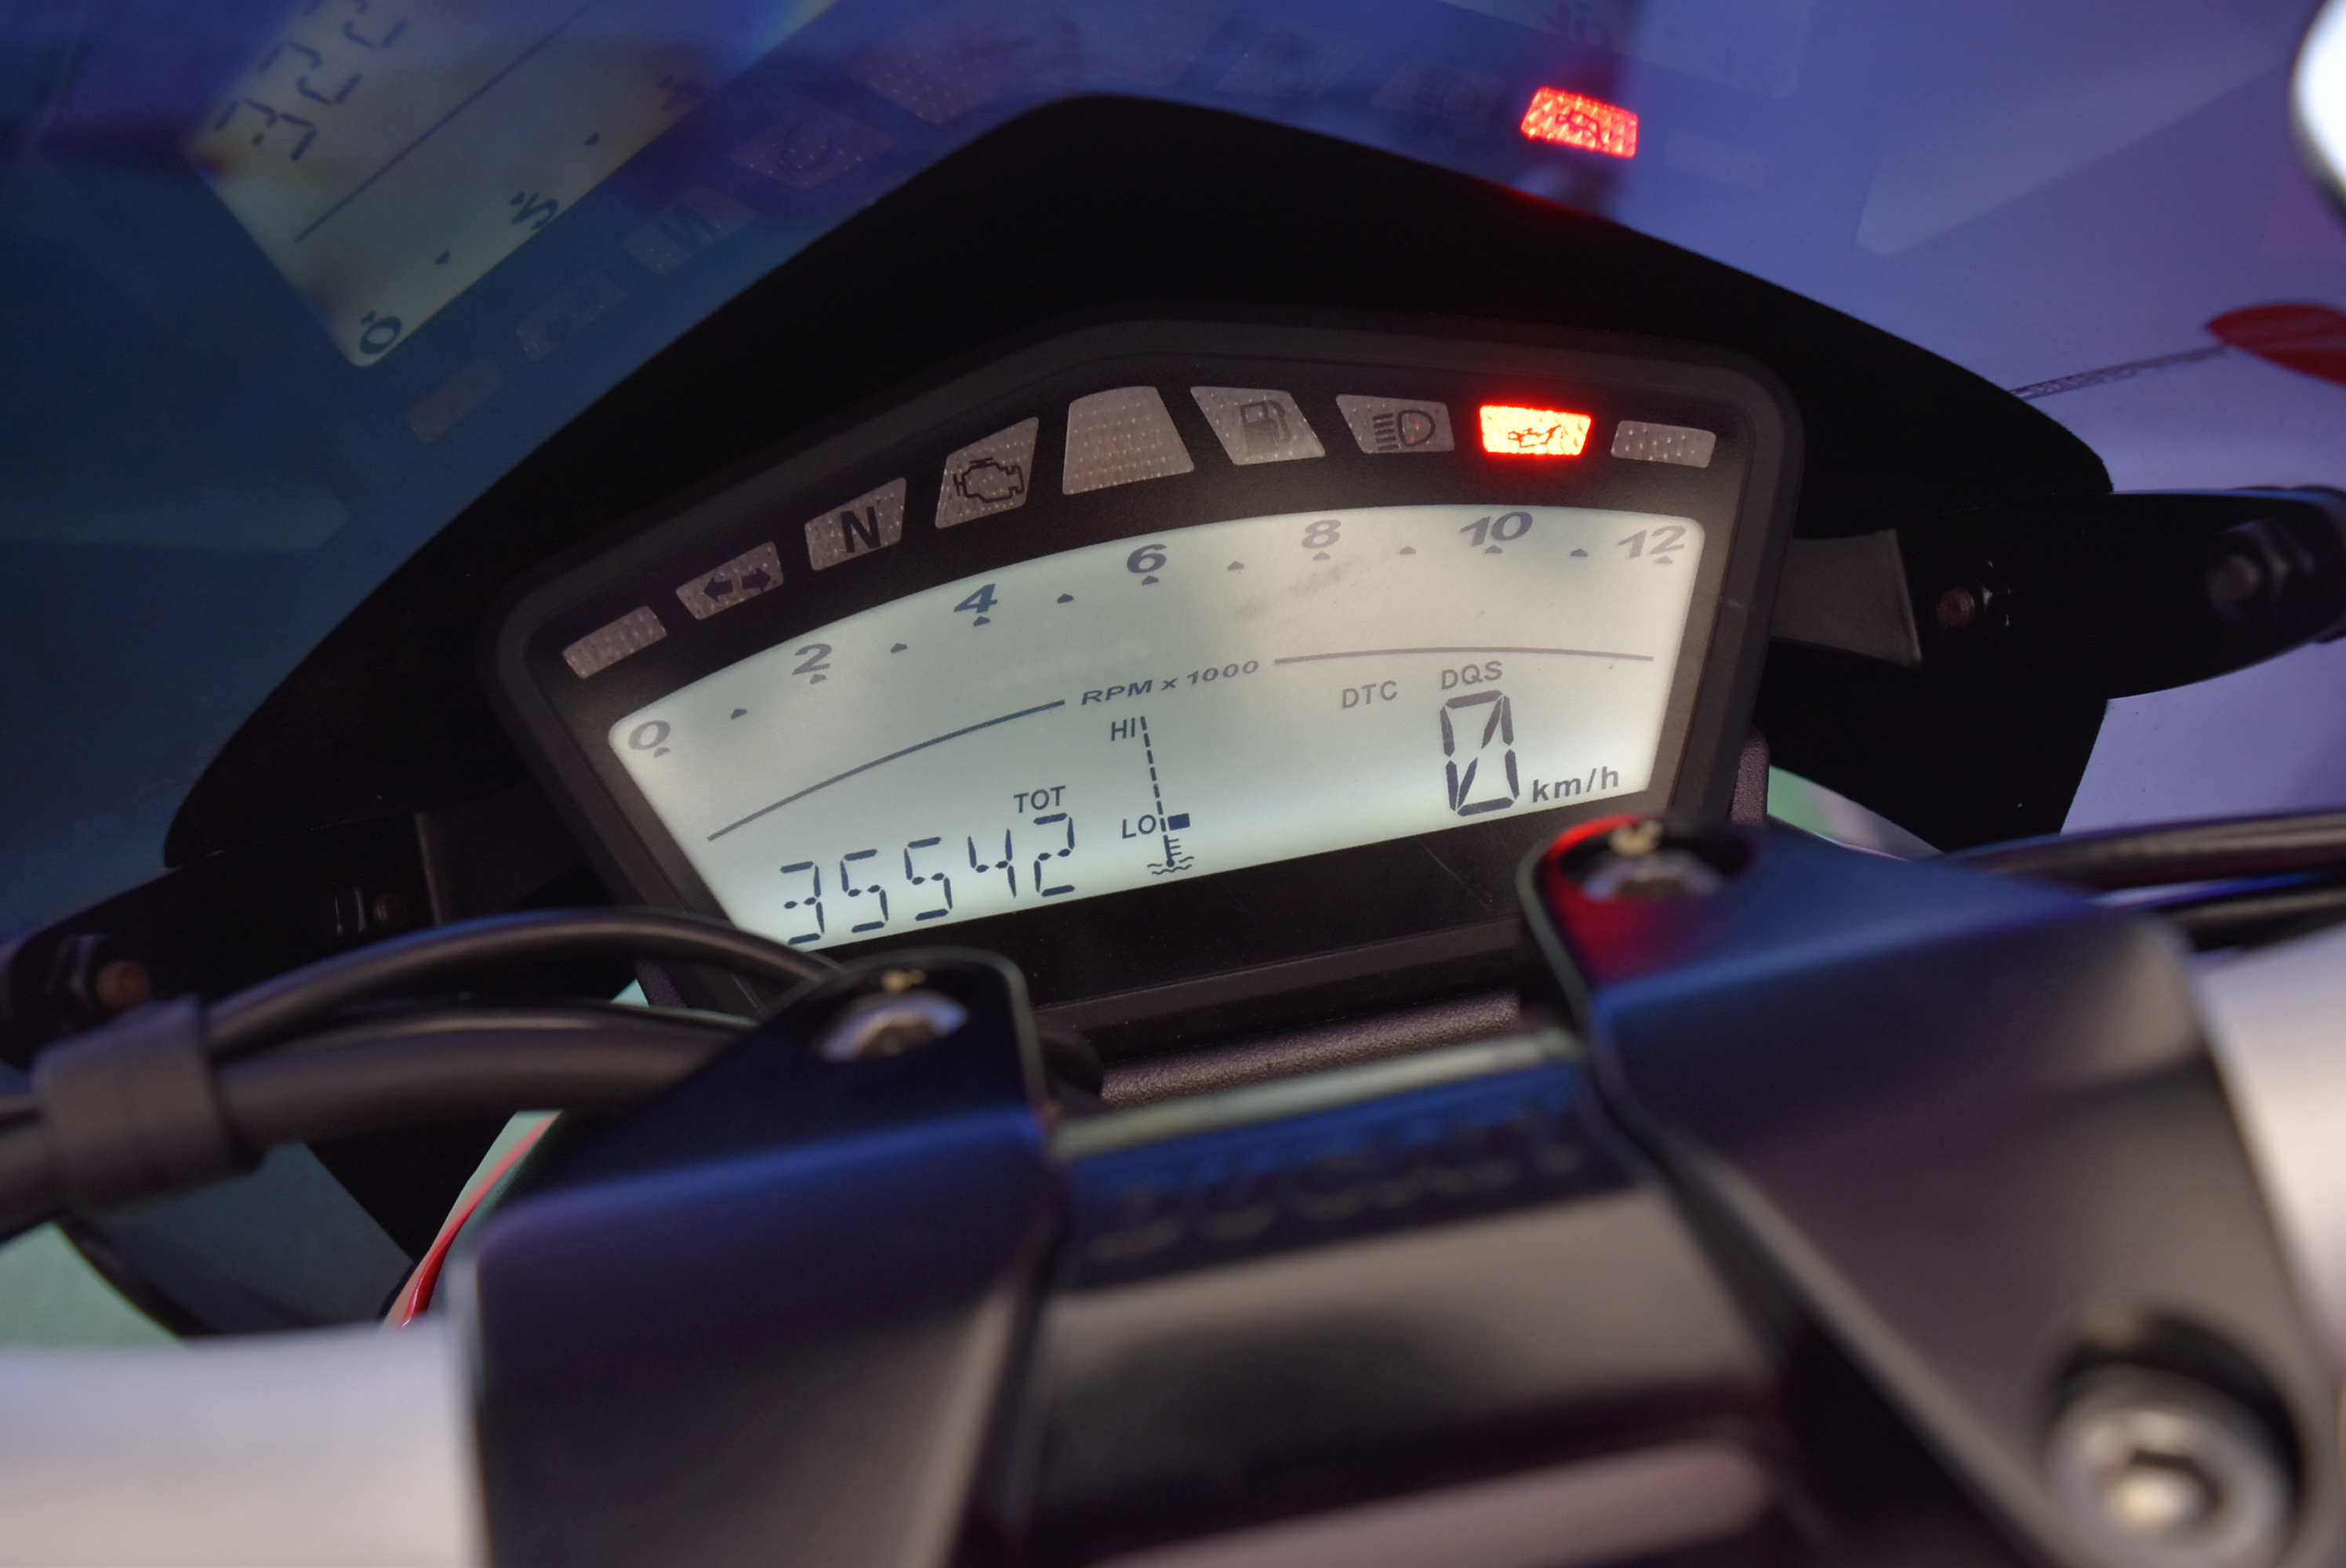 Ducati Streetfighter 848 – 2013